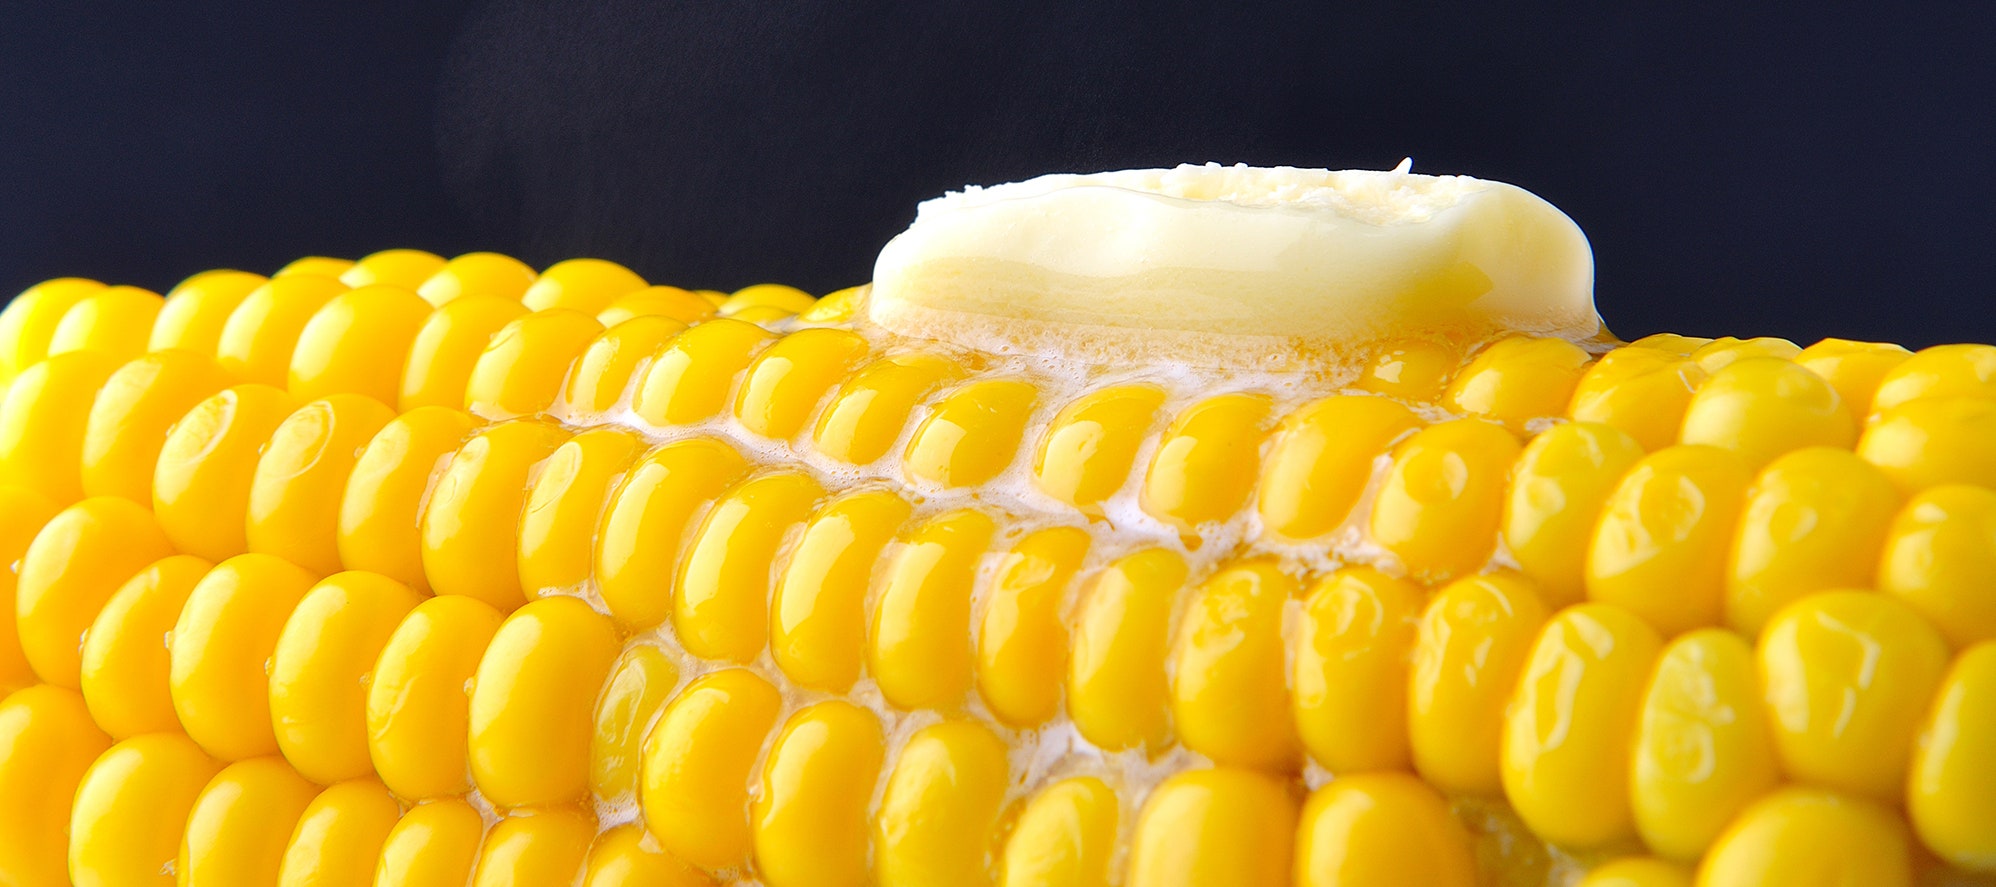 How to make corn on the cob?